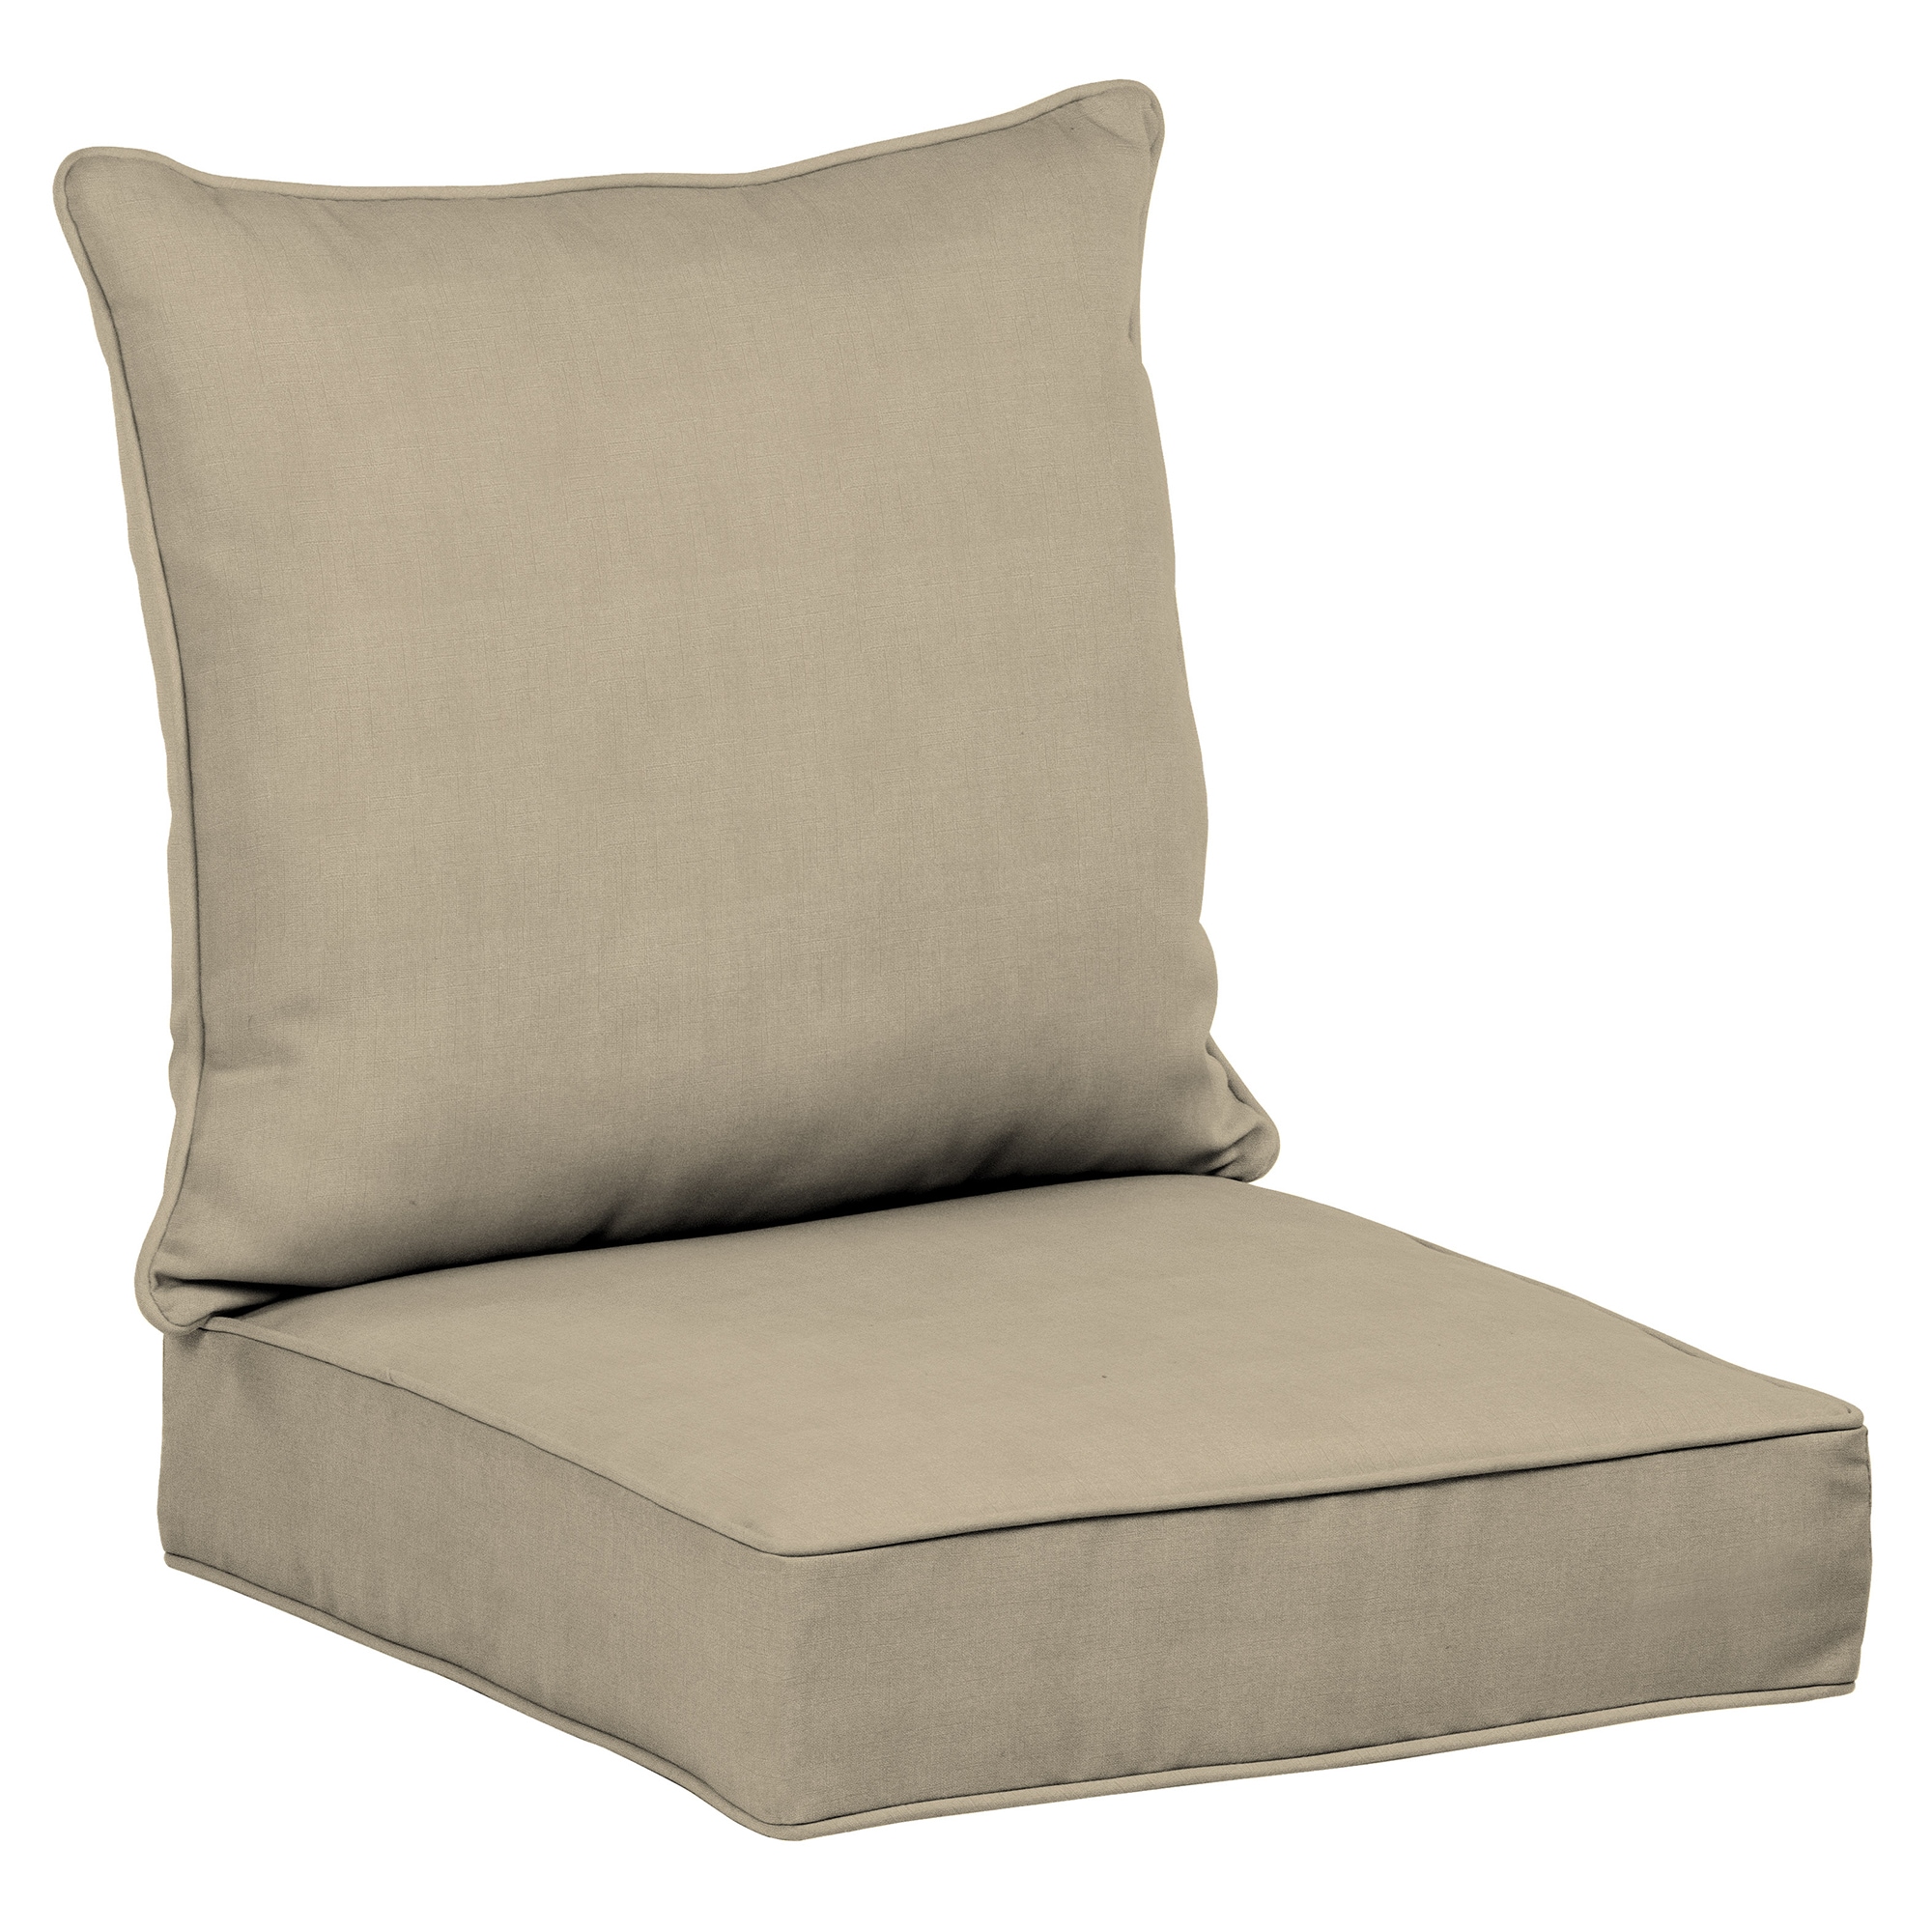 Deep Seat Patio Chair Cushion, How To Deep Clean Outdoor Cushion Covers